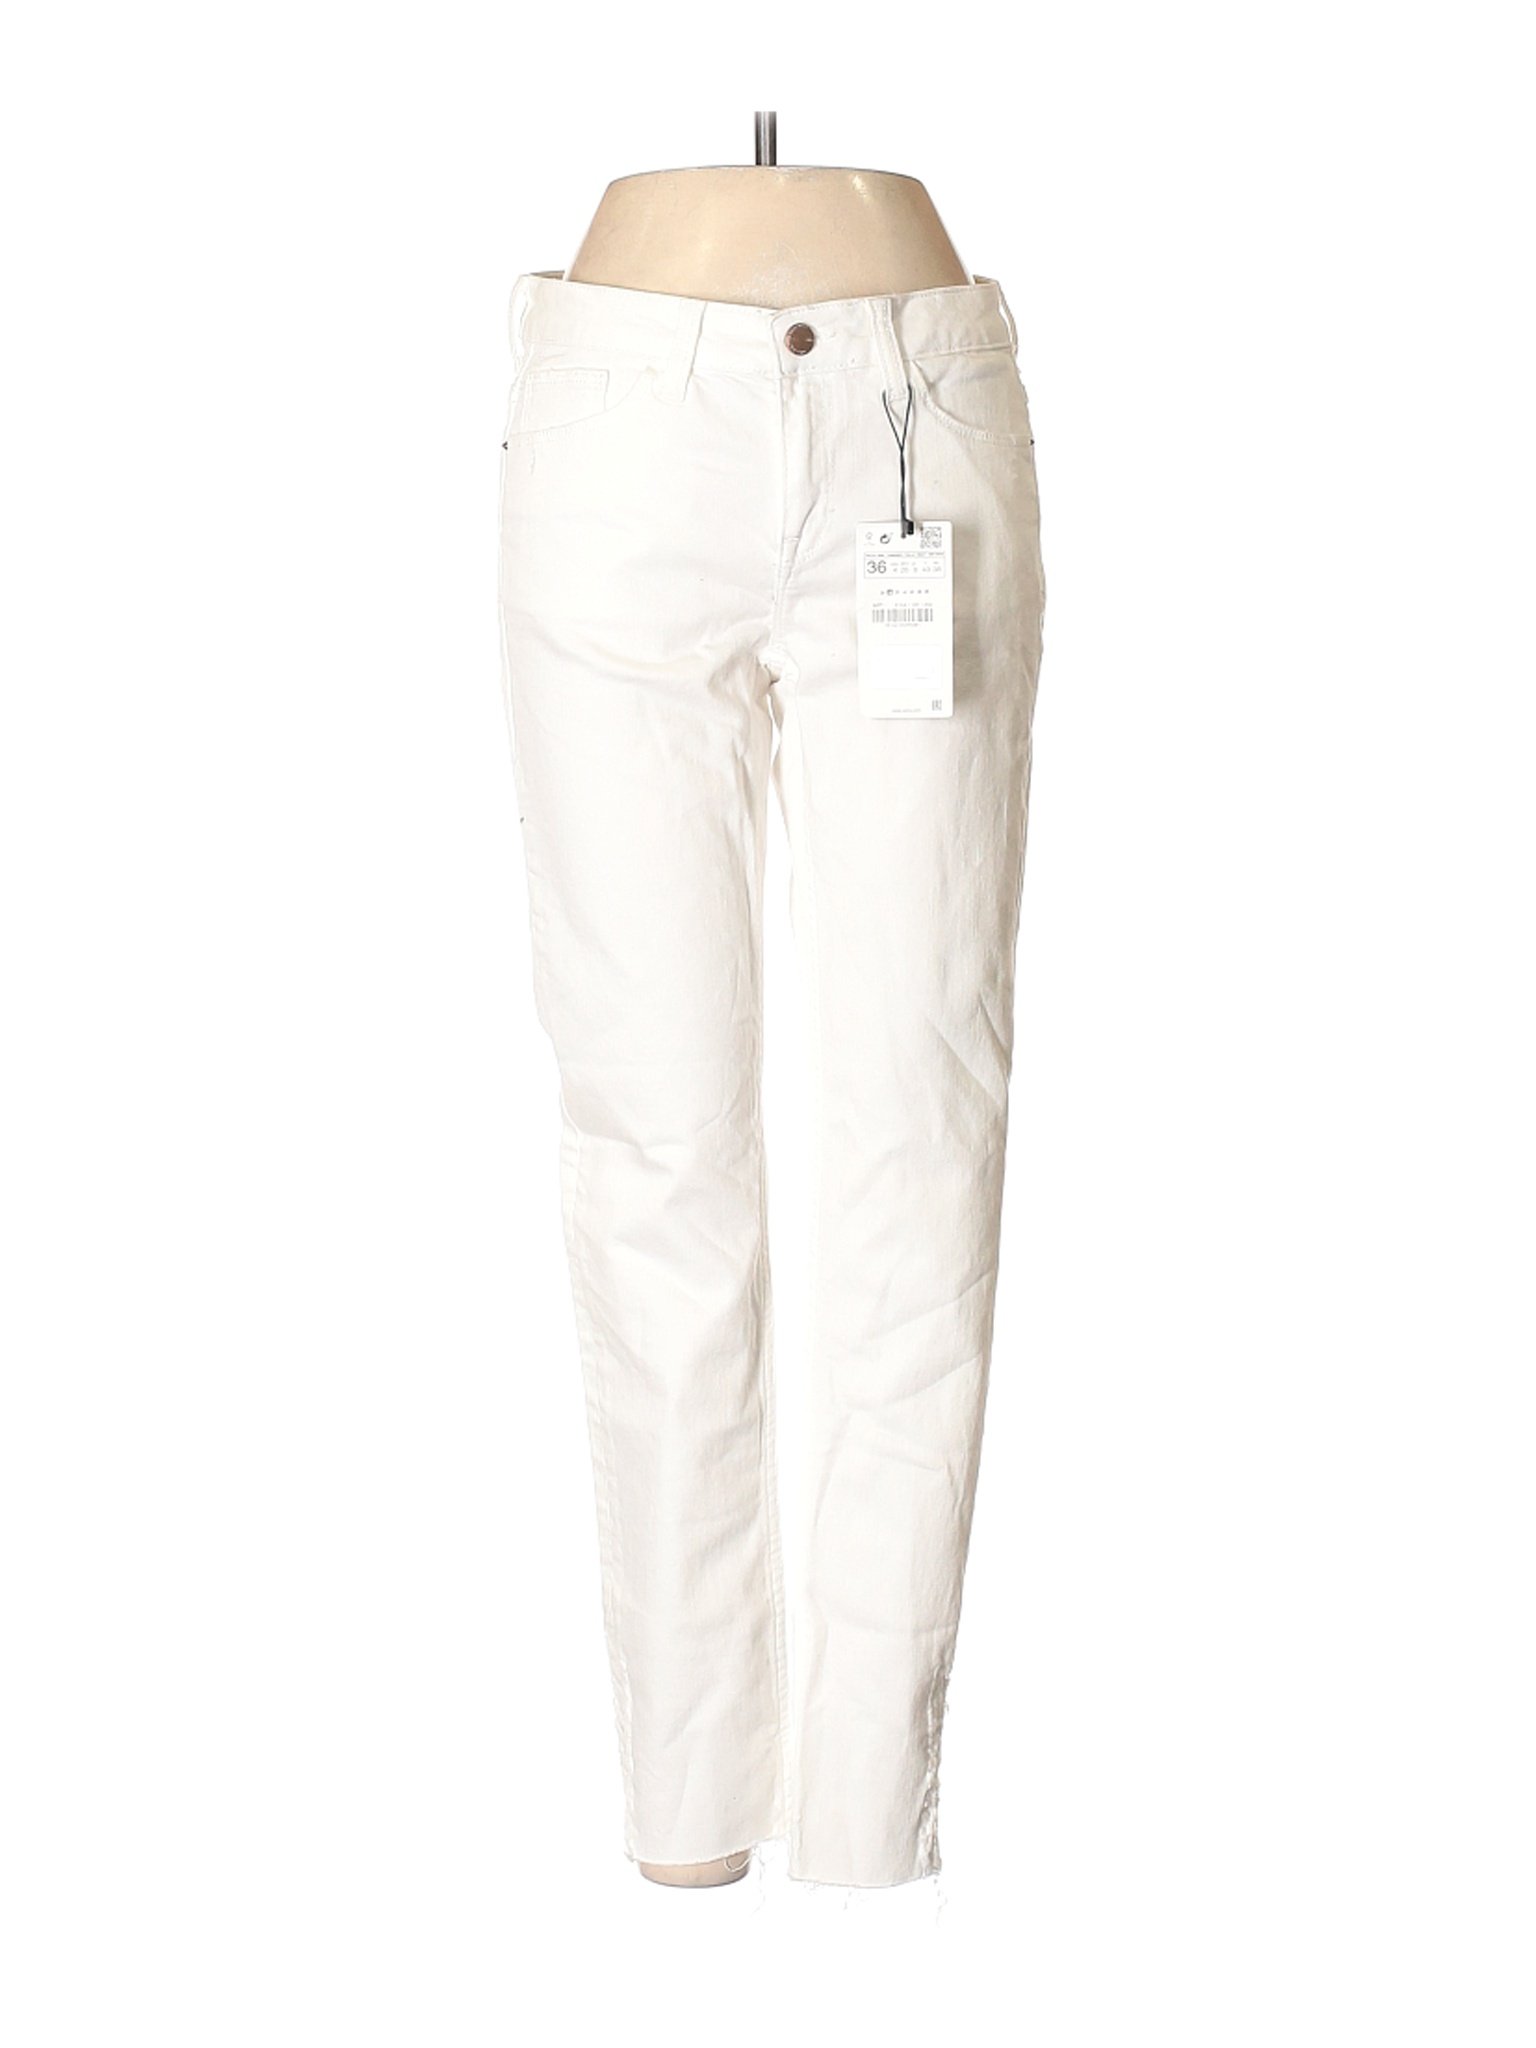 NWT Zara Basic Women White Jeans 4 | eBay